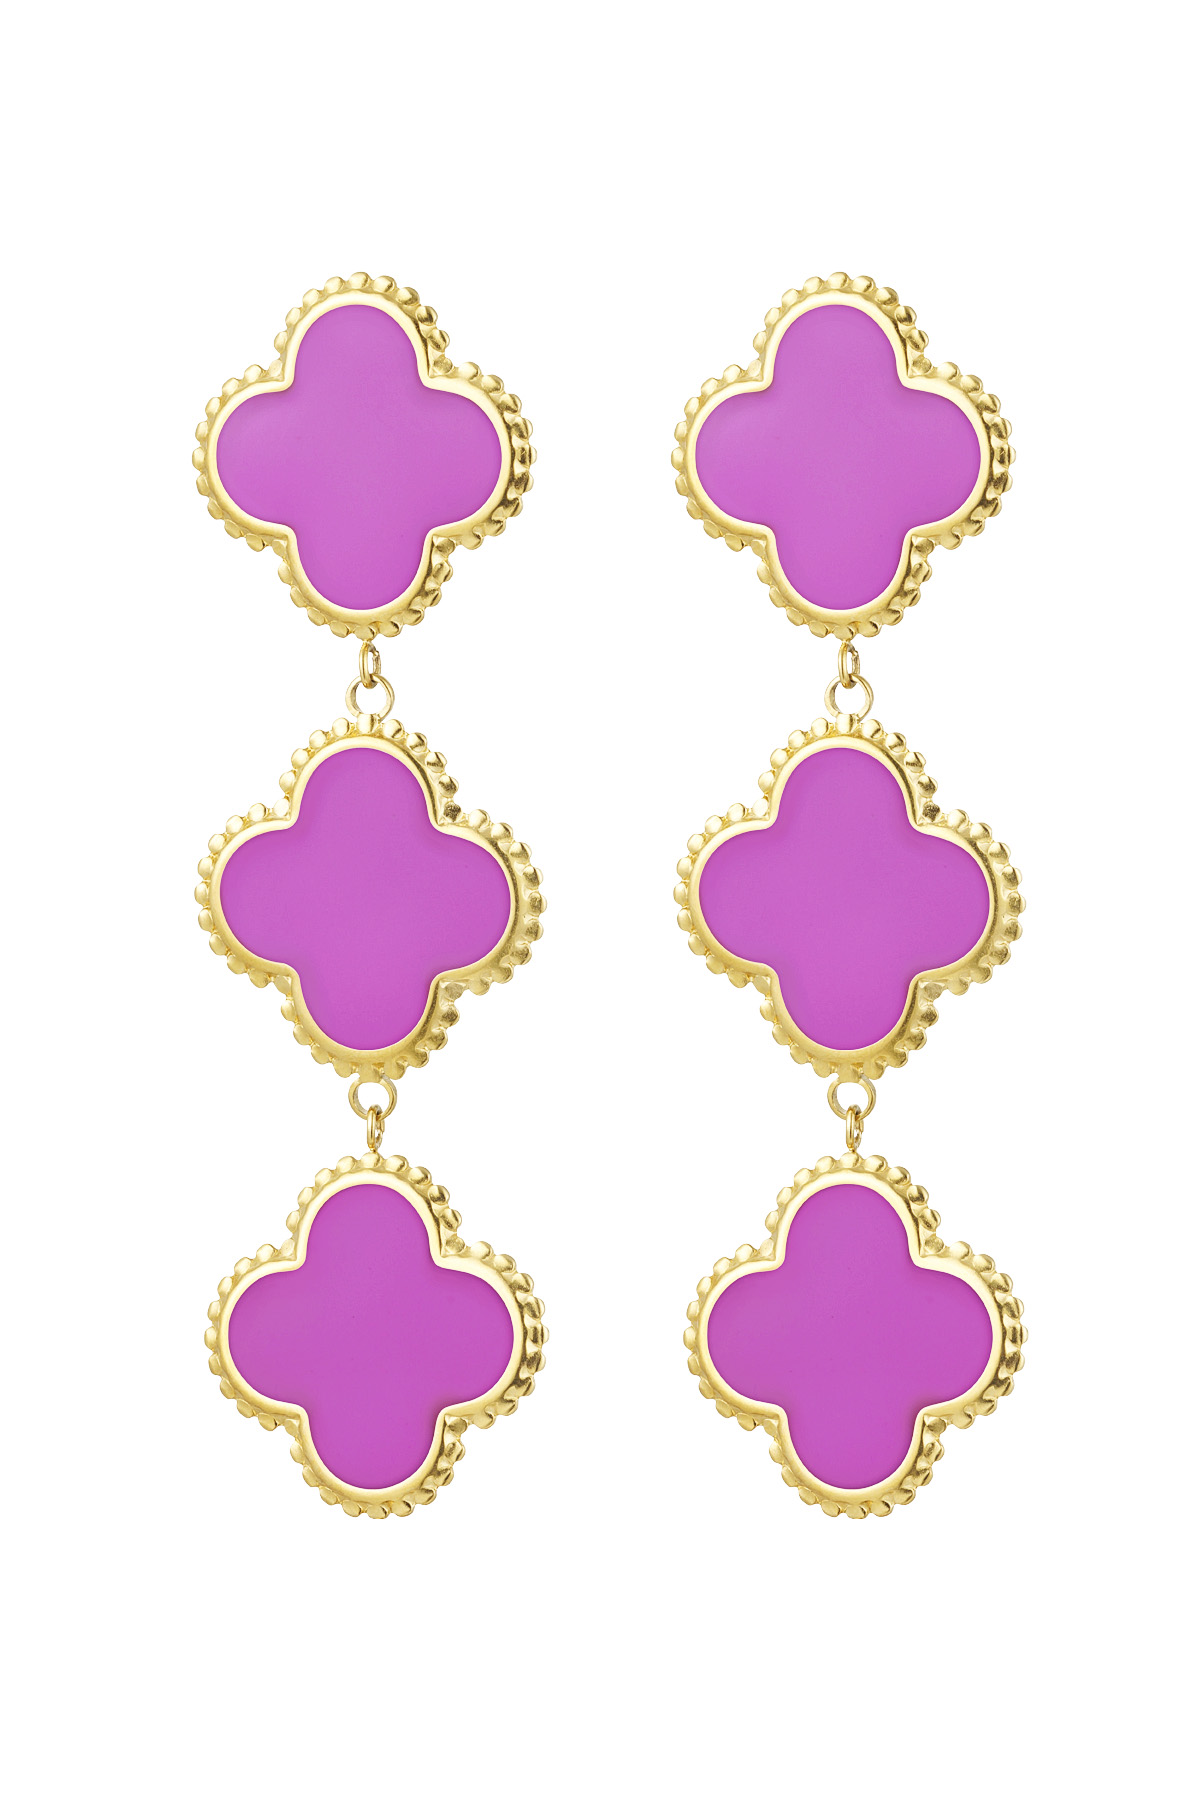 Earrings 3 clovers - purple Stainless Steel